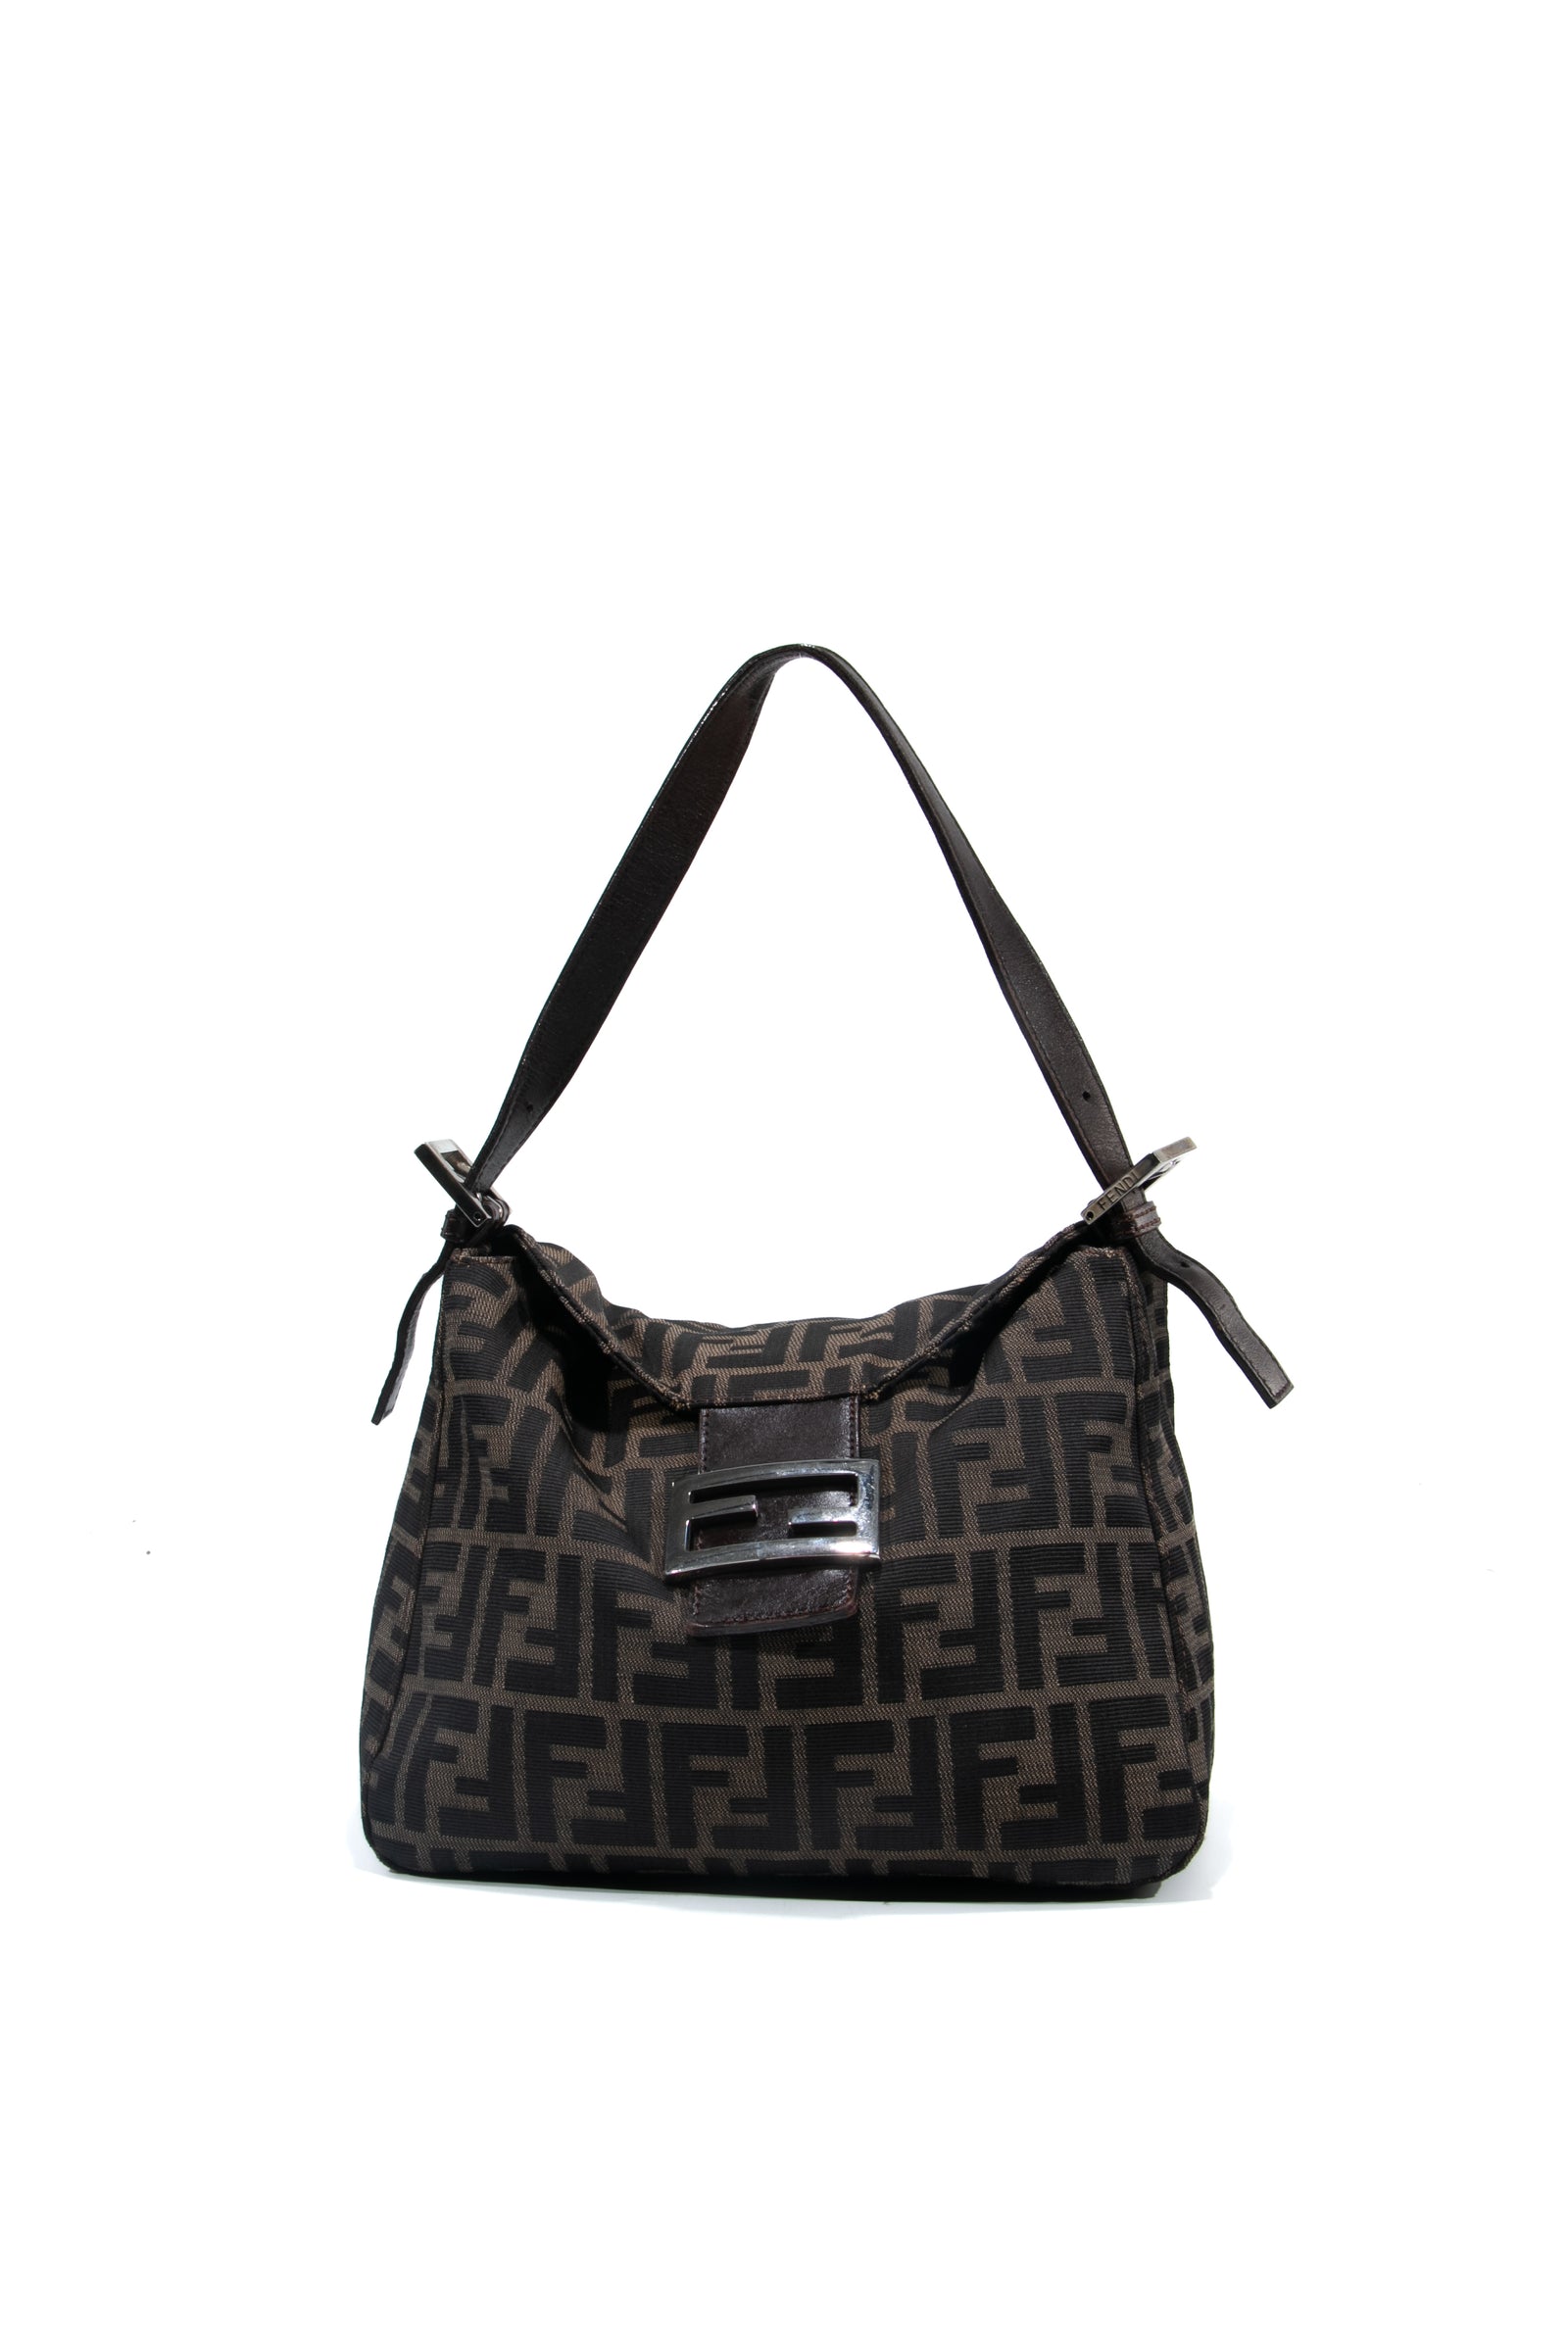 Modern Brown Fendi Roma Plain Ladies Trendy Leather Handbag, Size: Free Size